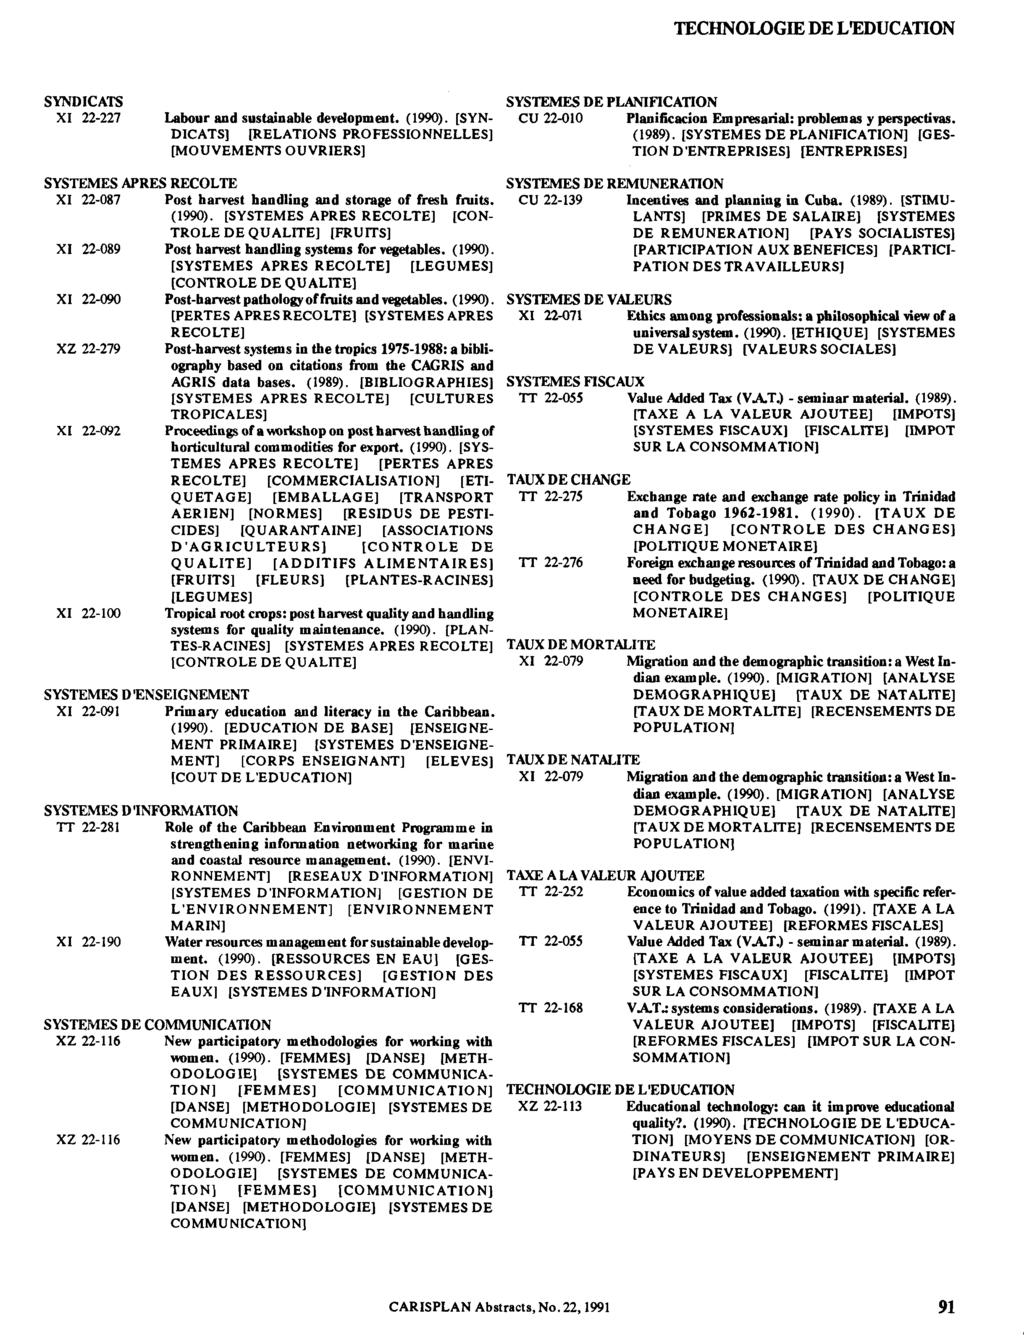 TECHNOLOGIE DE L'EDUCATION SYNDICATS XI 22-227 Labour and sustainable development. (1990).